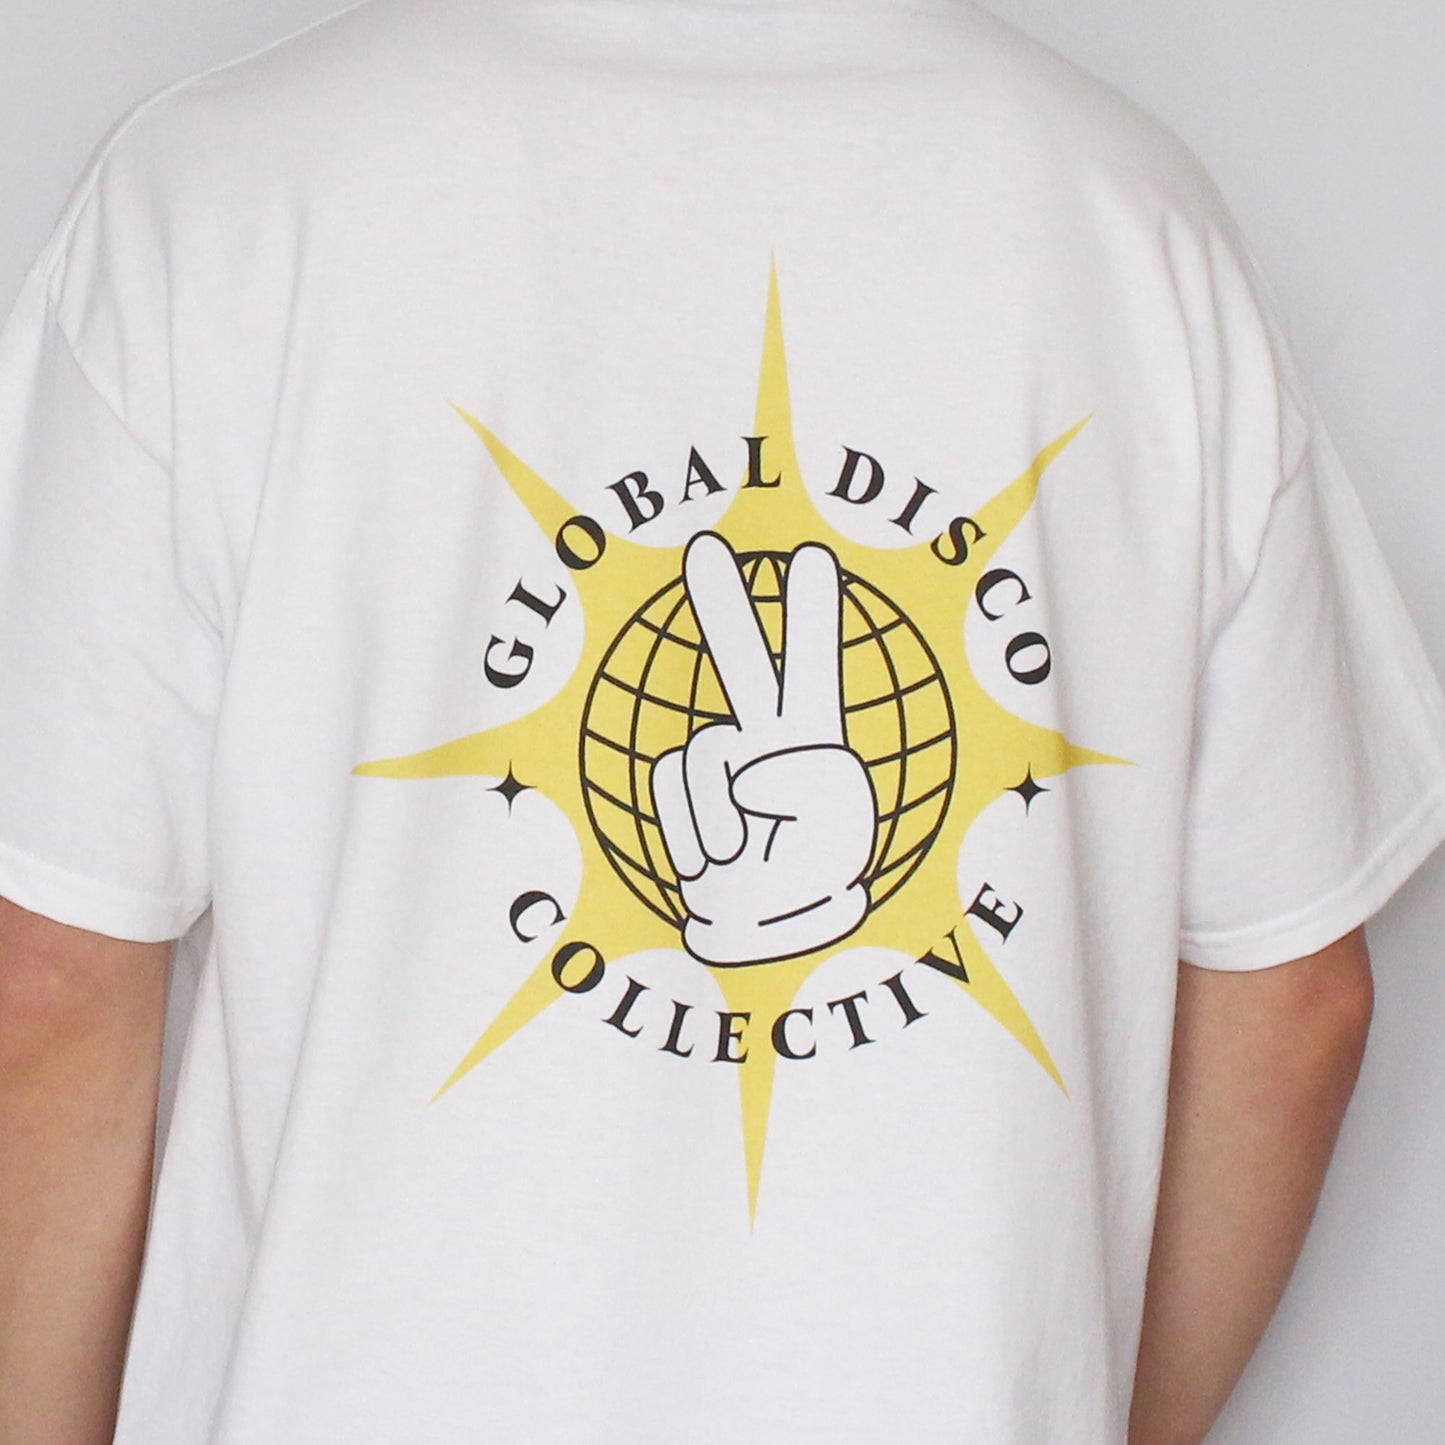 Global Disco Collective